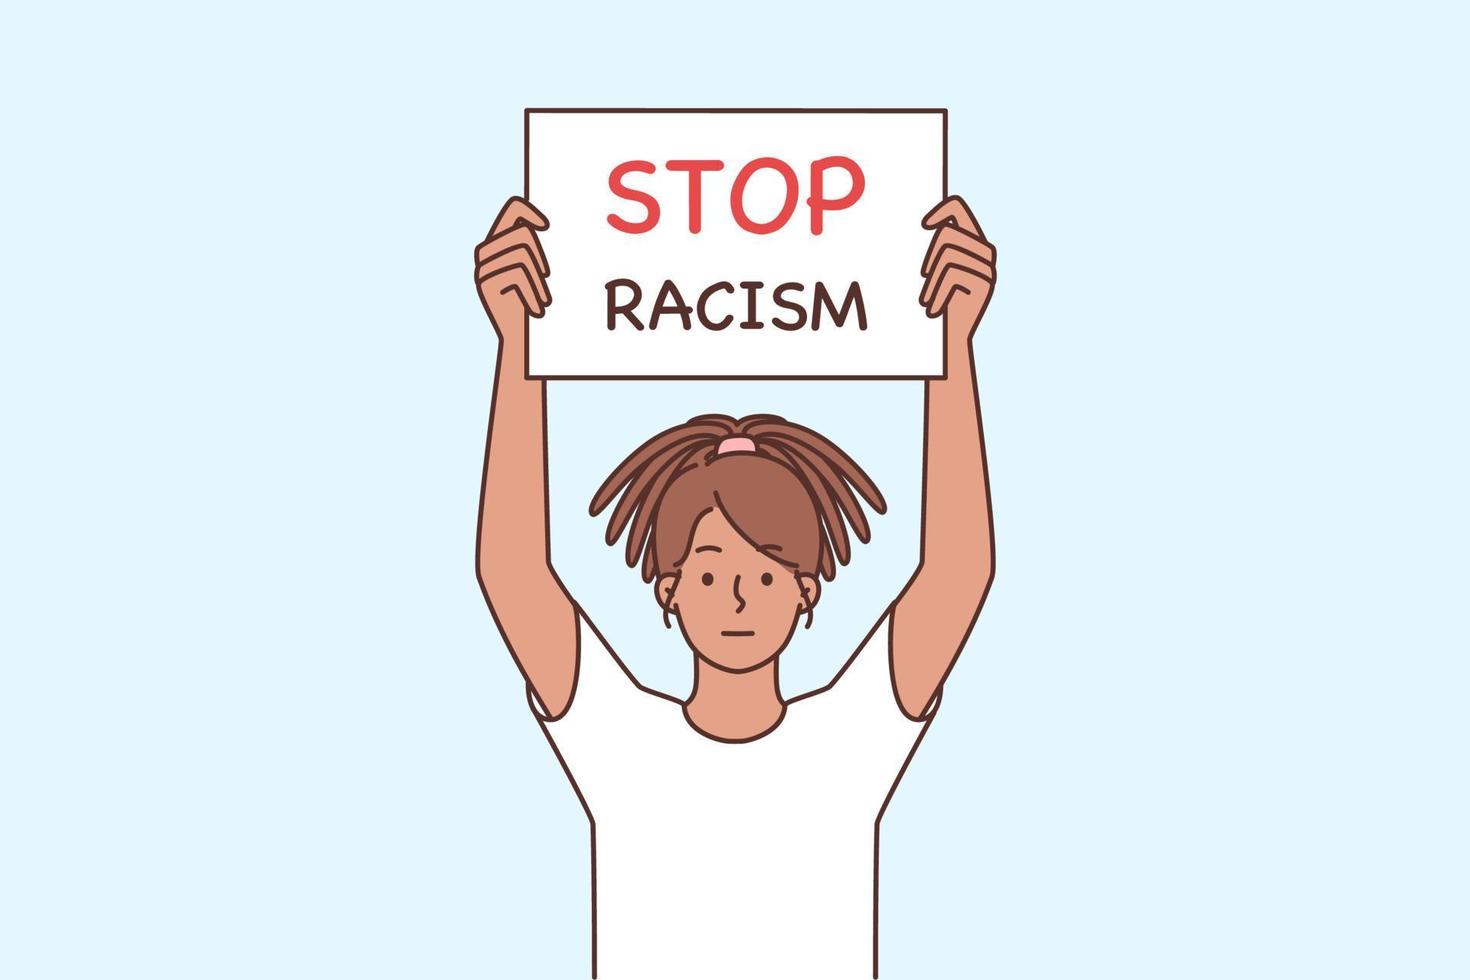 ung afrikansk amerikan kvinna innehav plakat ordspråk sluta rasism protest på gata demonstration eller Mars. svart flicka med affisch mot ras- diskriminering. vektor illustration.